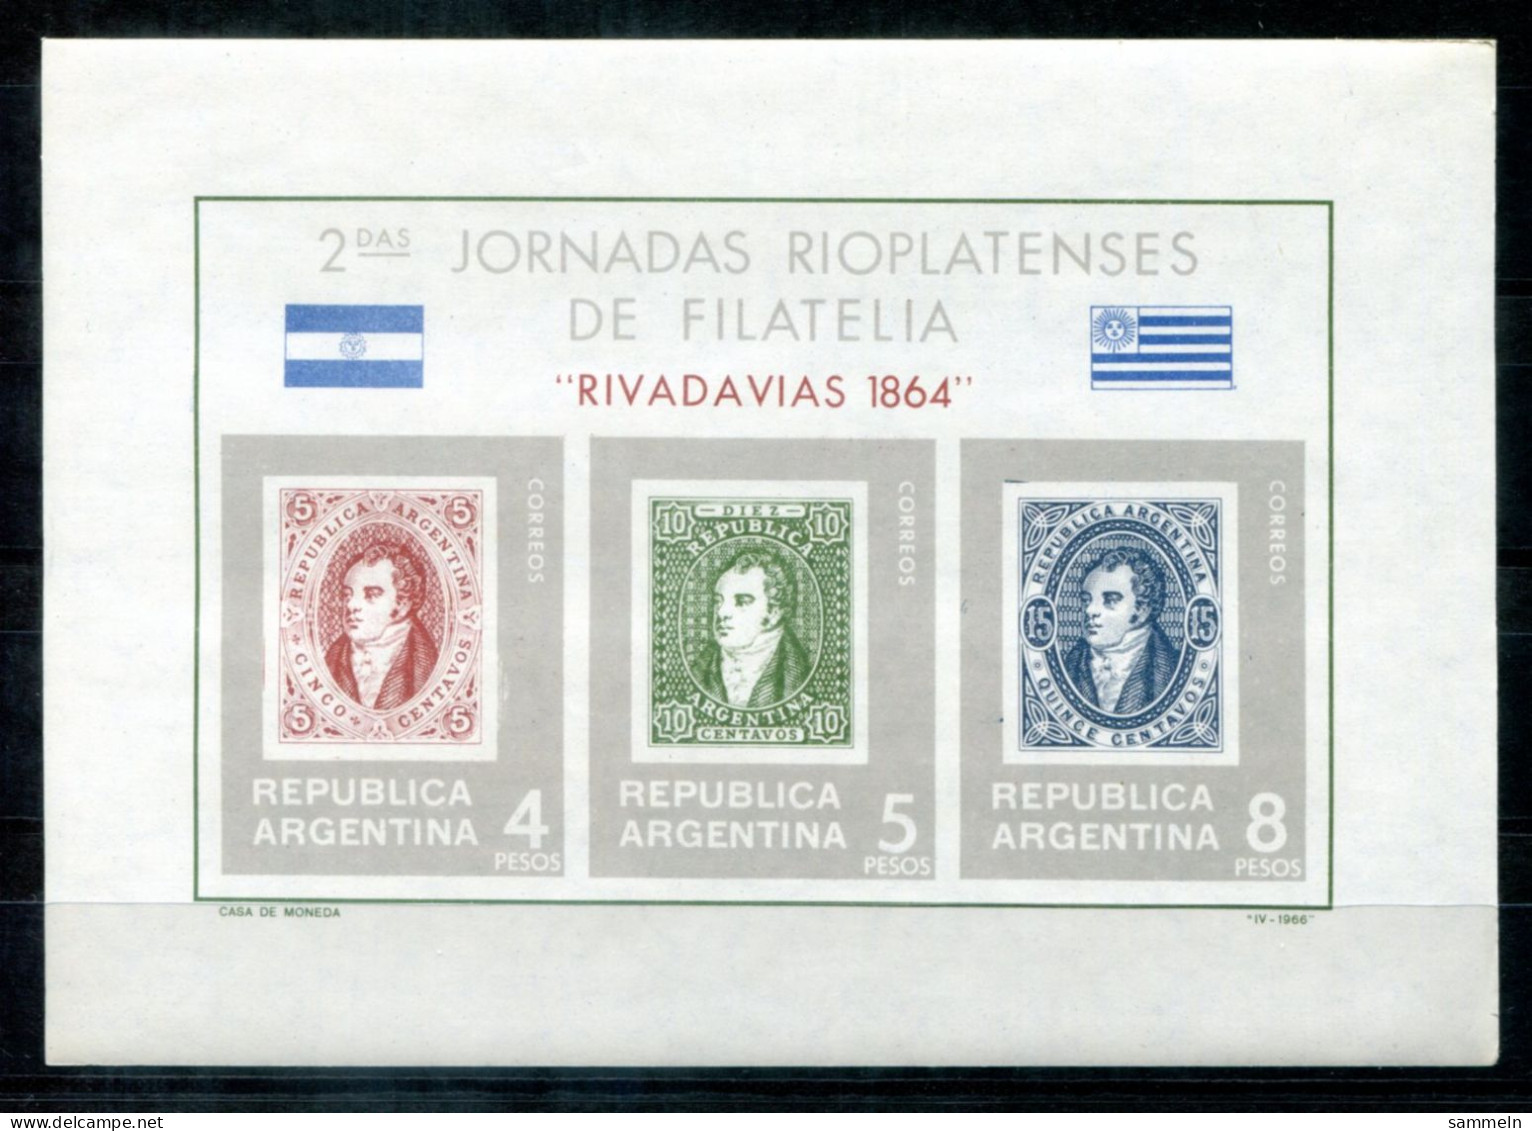 ARGENTINIEN Block 16, Bl.16 Mnh (see TEXT!!)- Marke Auf Marke, Stamp On Stamp, Timbre Sur Timbre - ARGENTINA / ARGENTINE - Blocks & Sheetlets